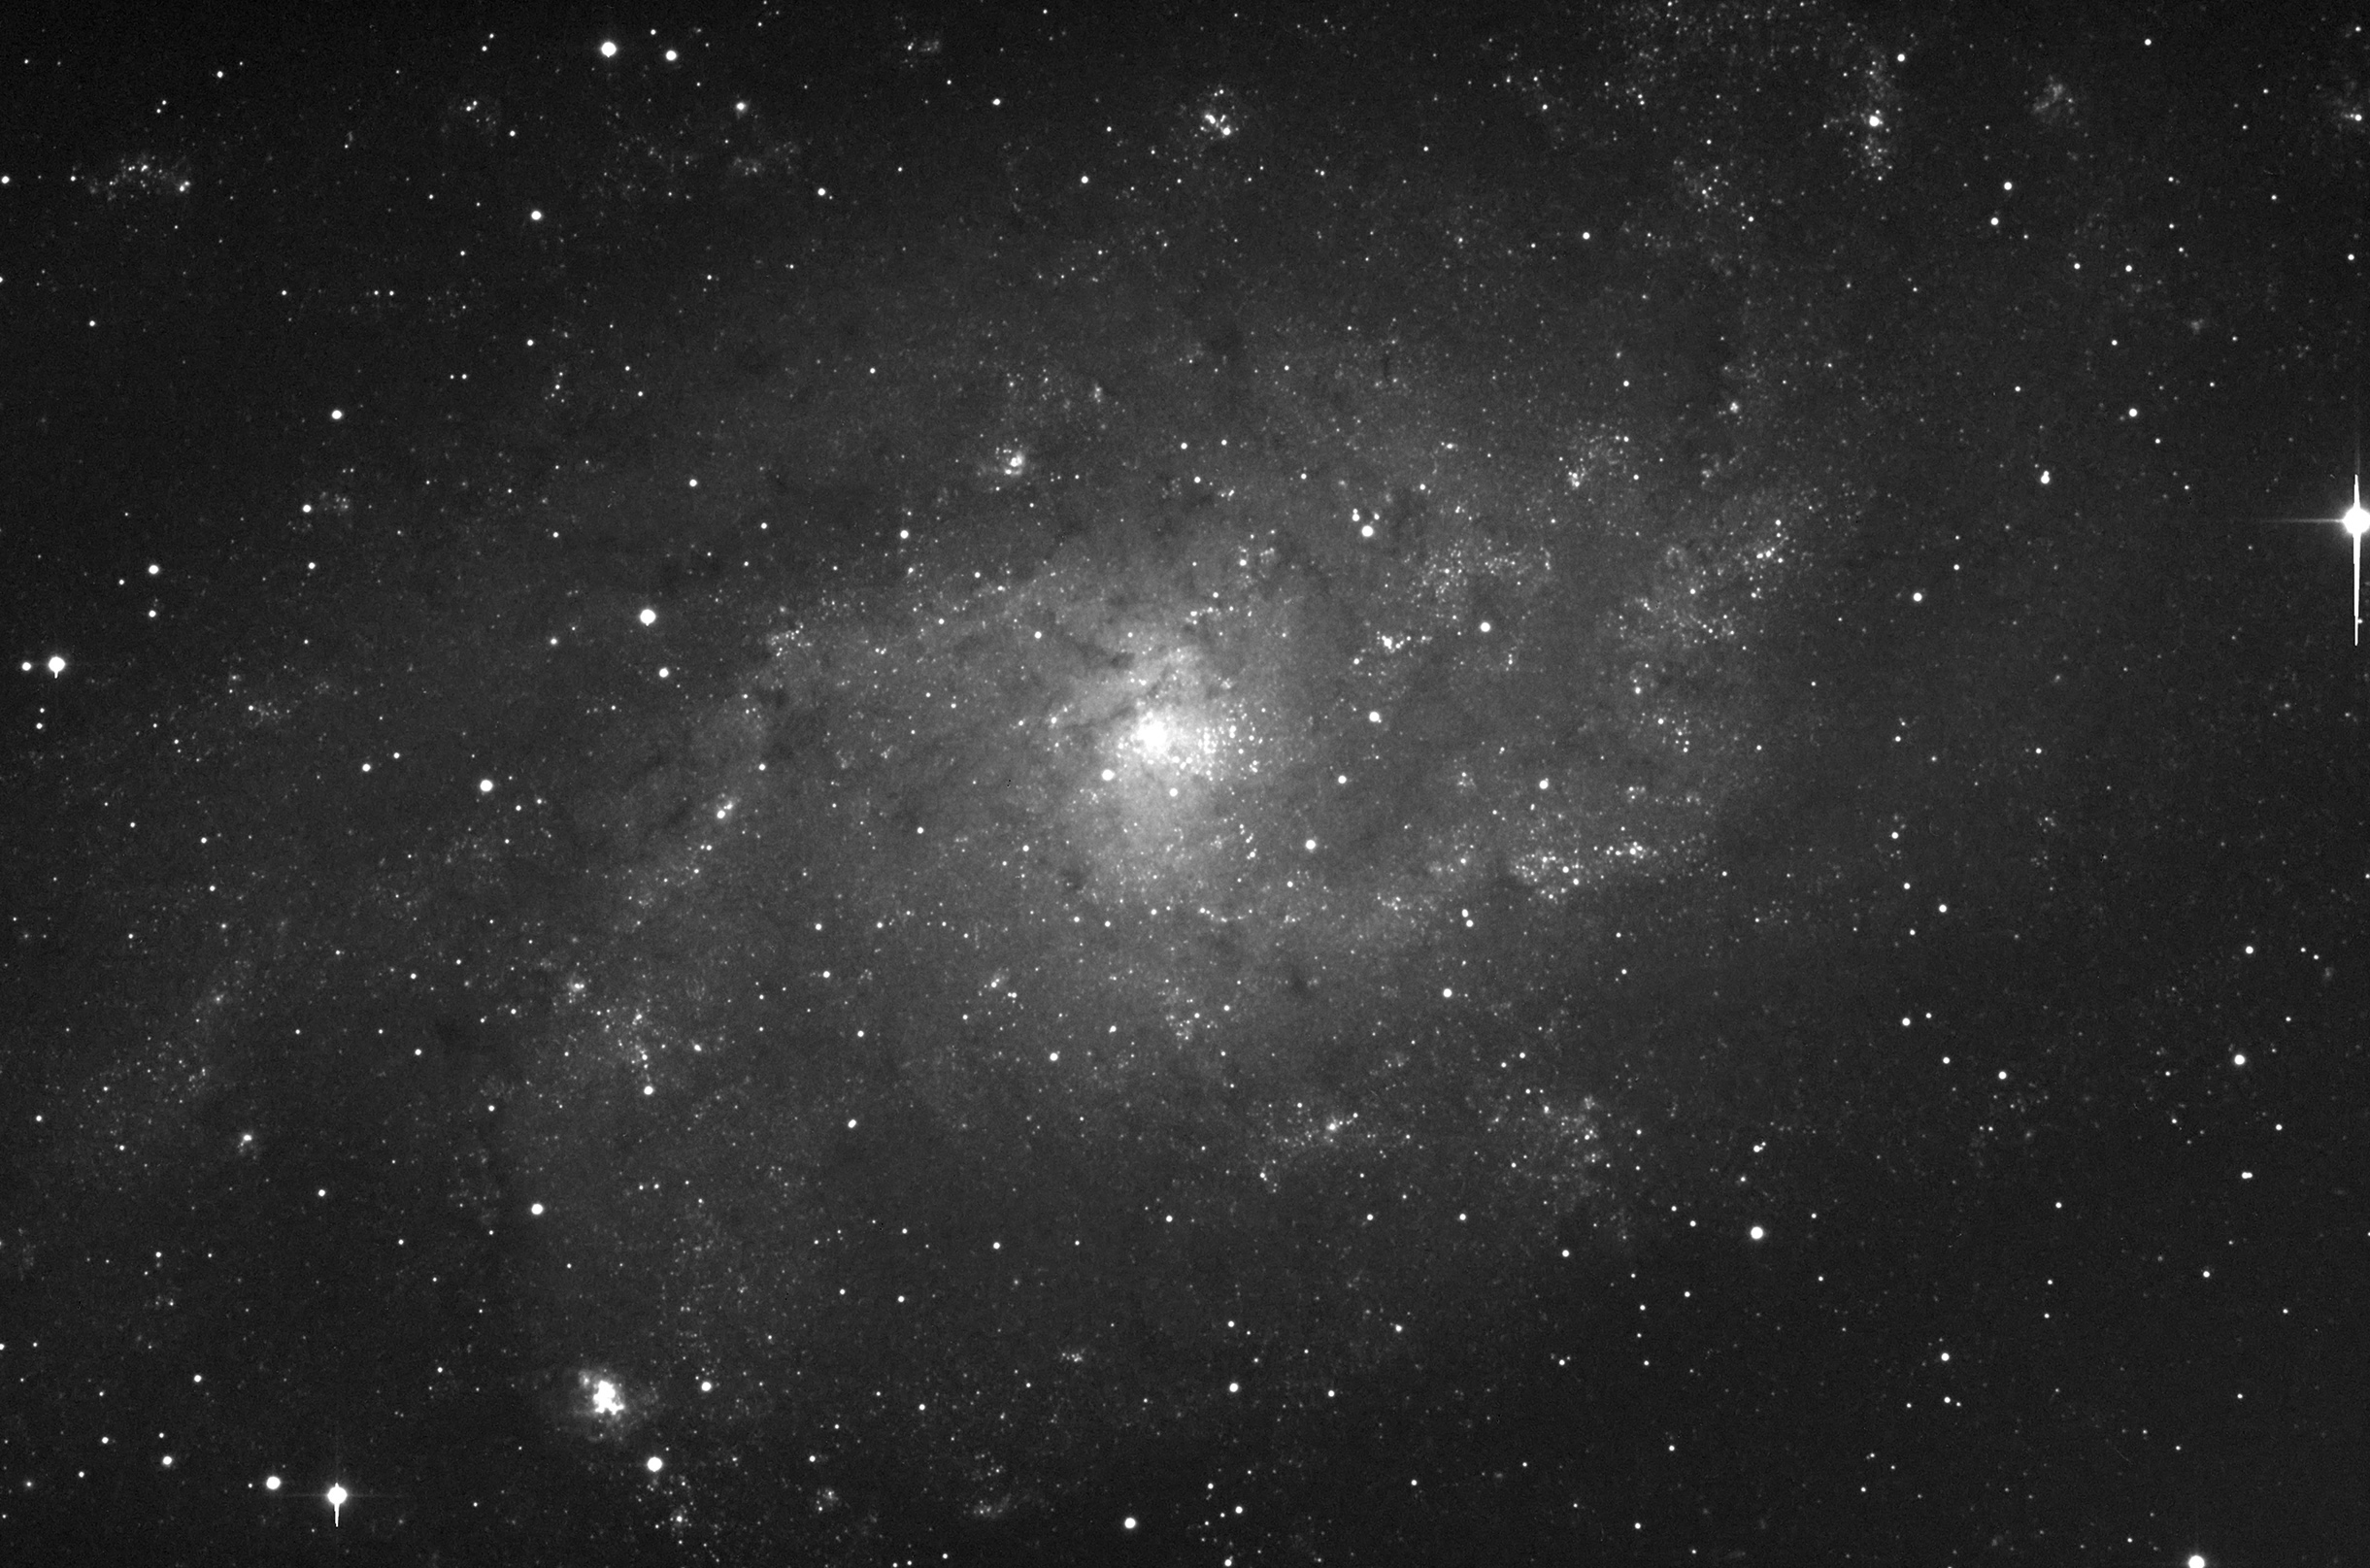 Download wallpaper 480x800 moon clouds sky blackandwhite nokia x x2  xl 520 620 820 samsung galaxy star ace asus zenfone 4 hd background